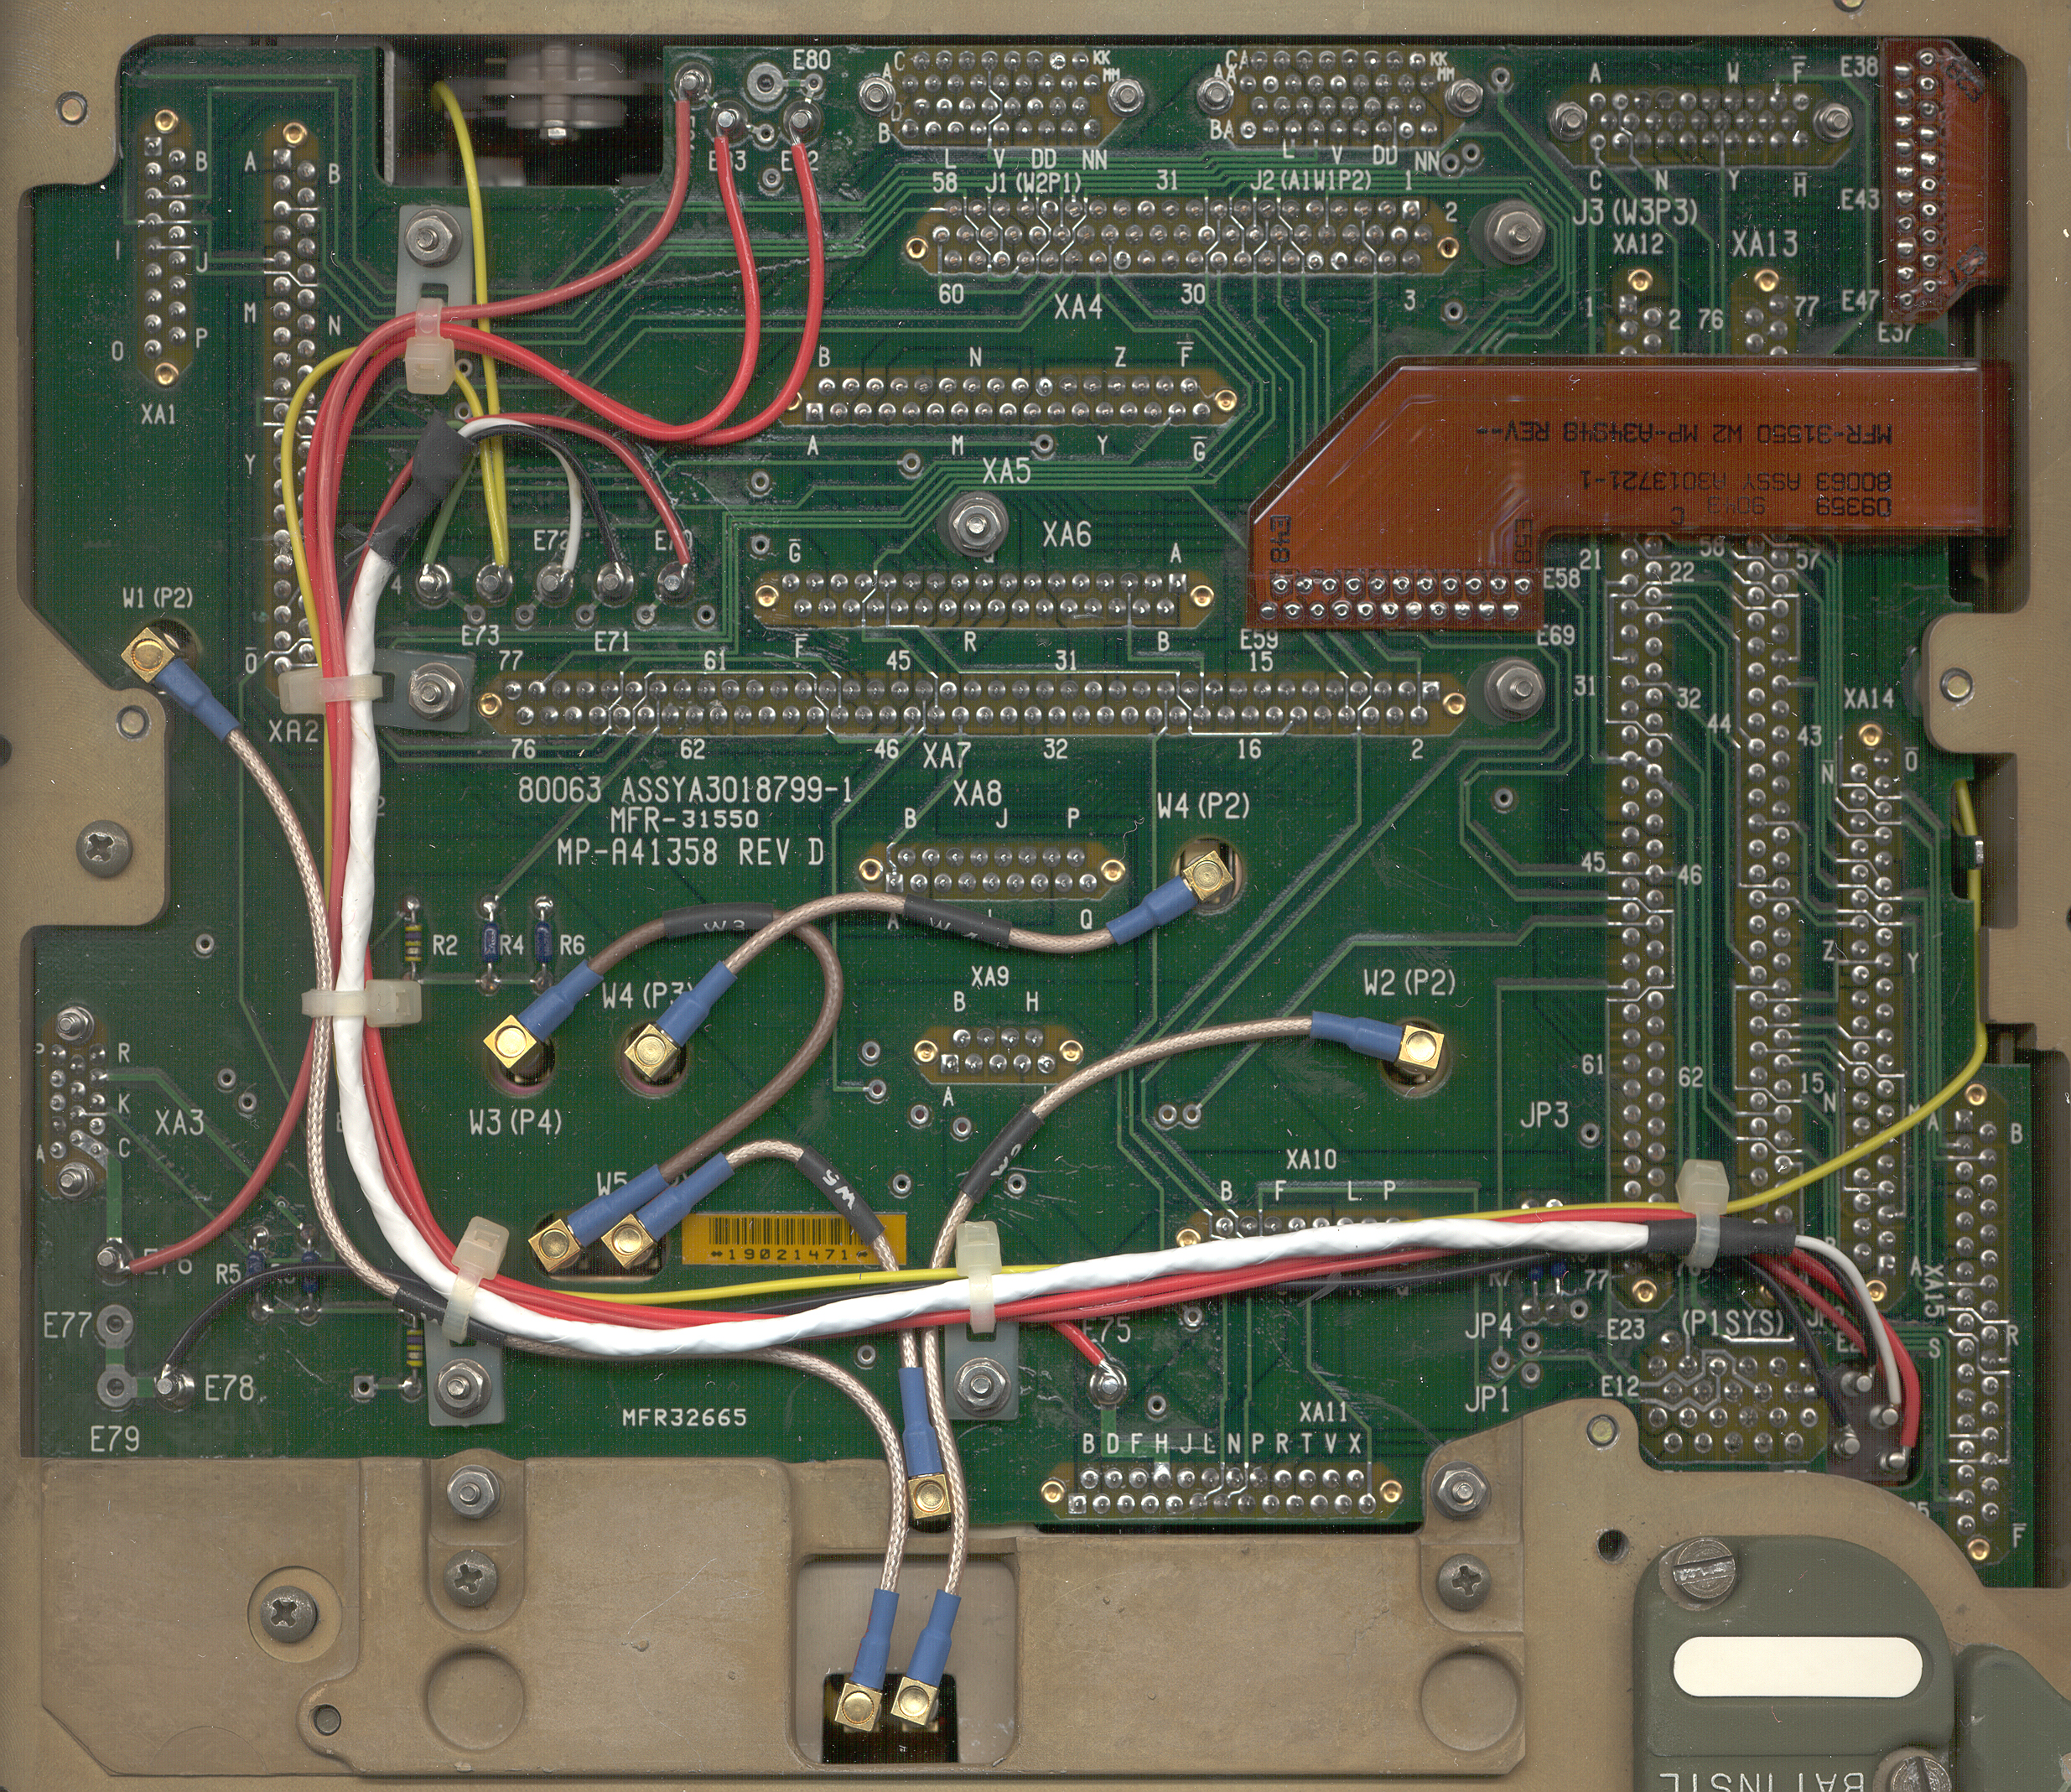 Battery Temperature Sensor for VRC-200 (VRC-100) Controller